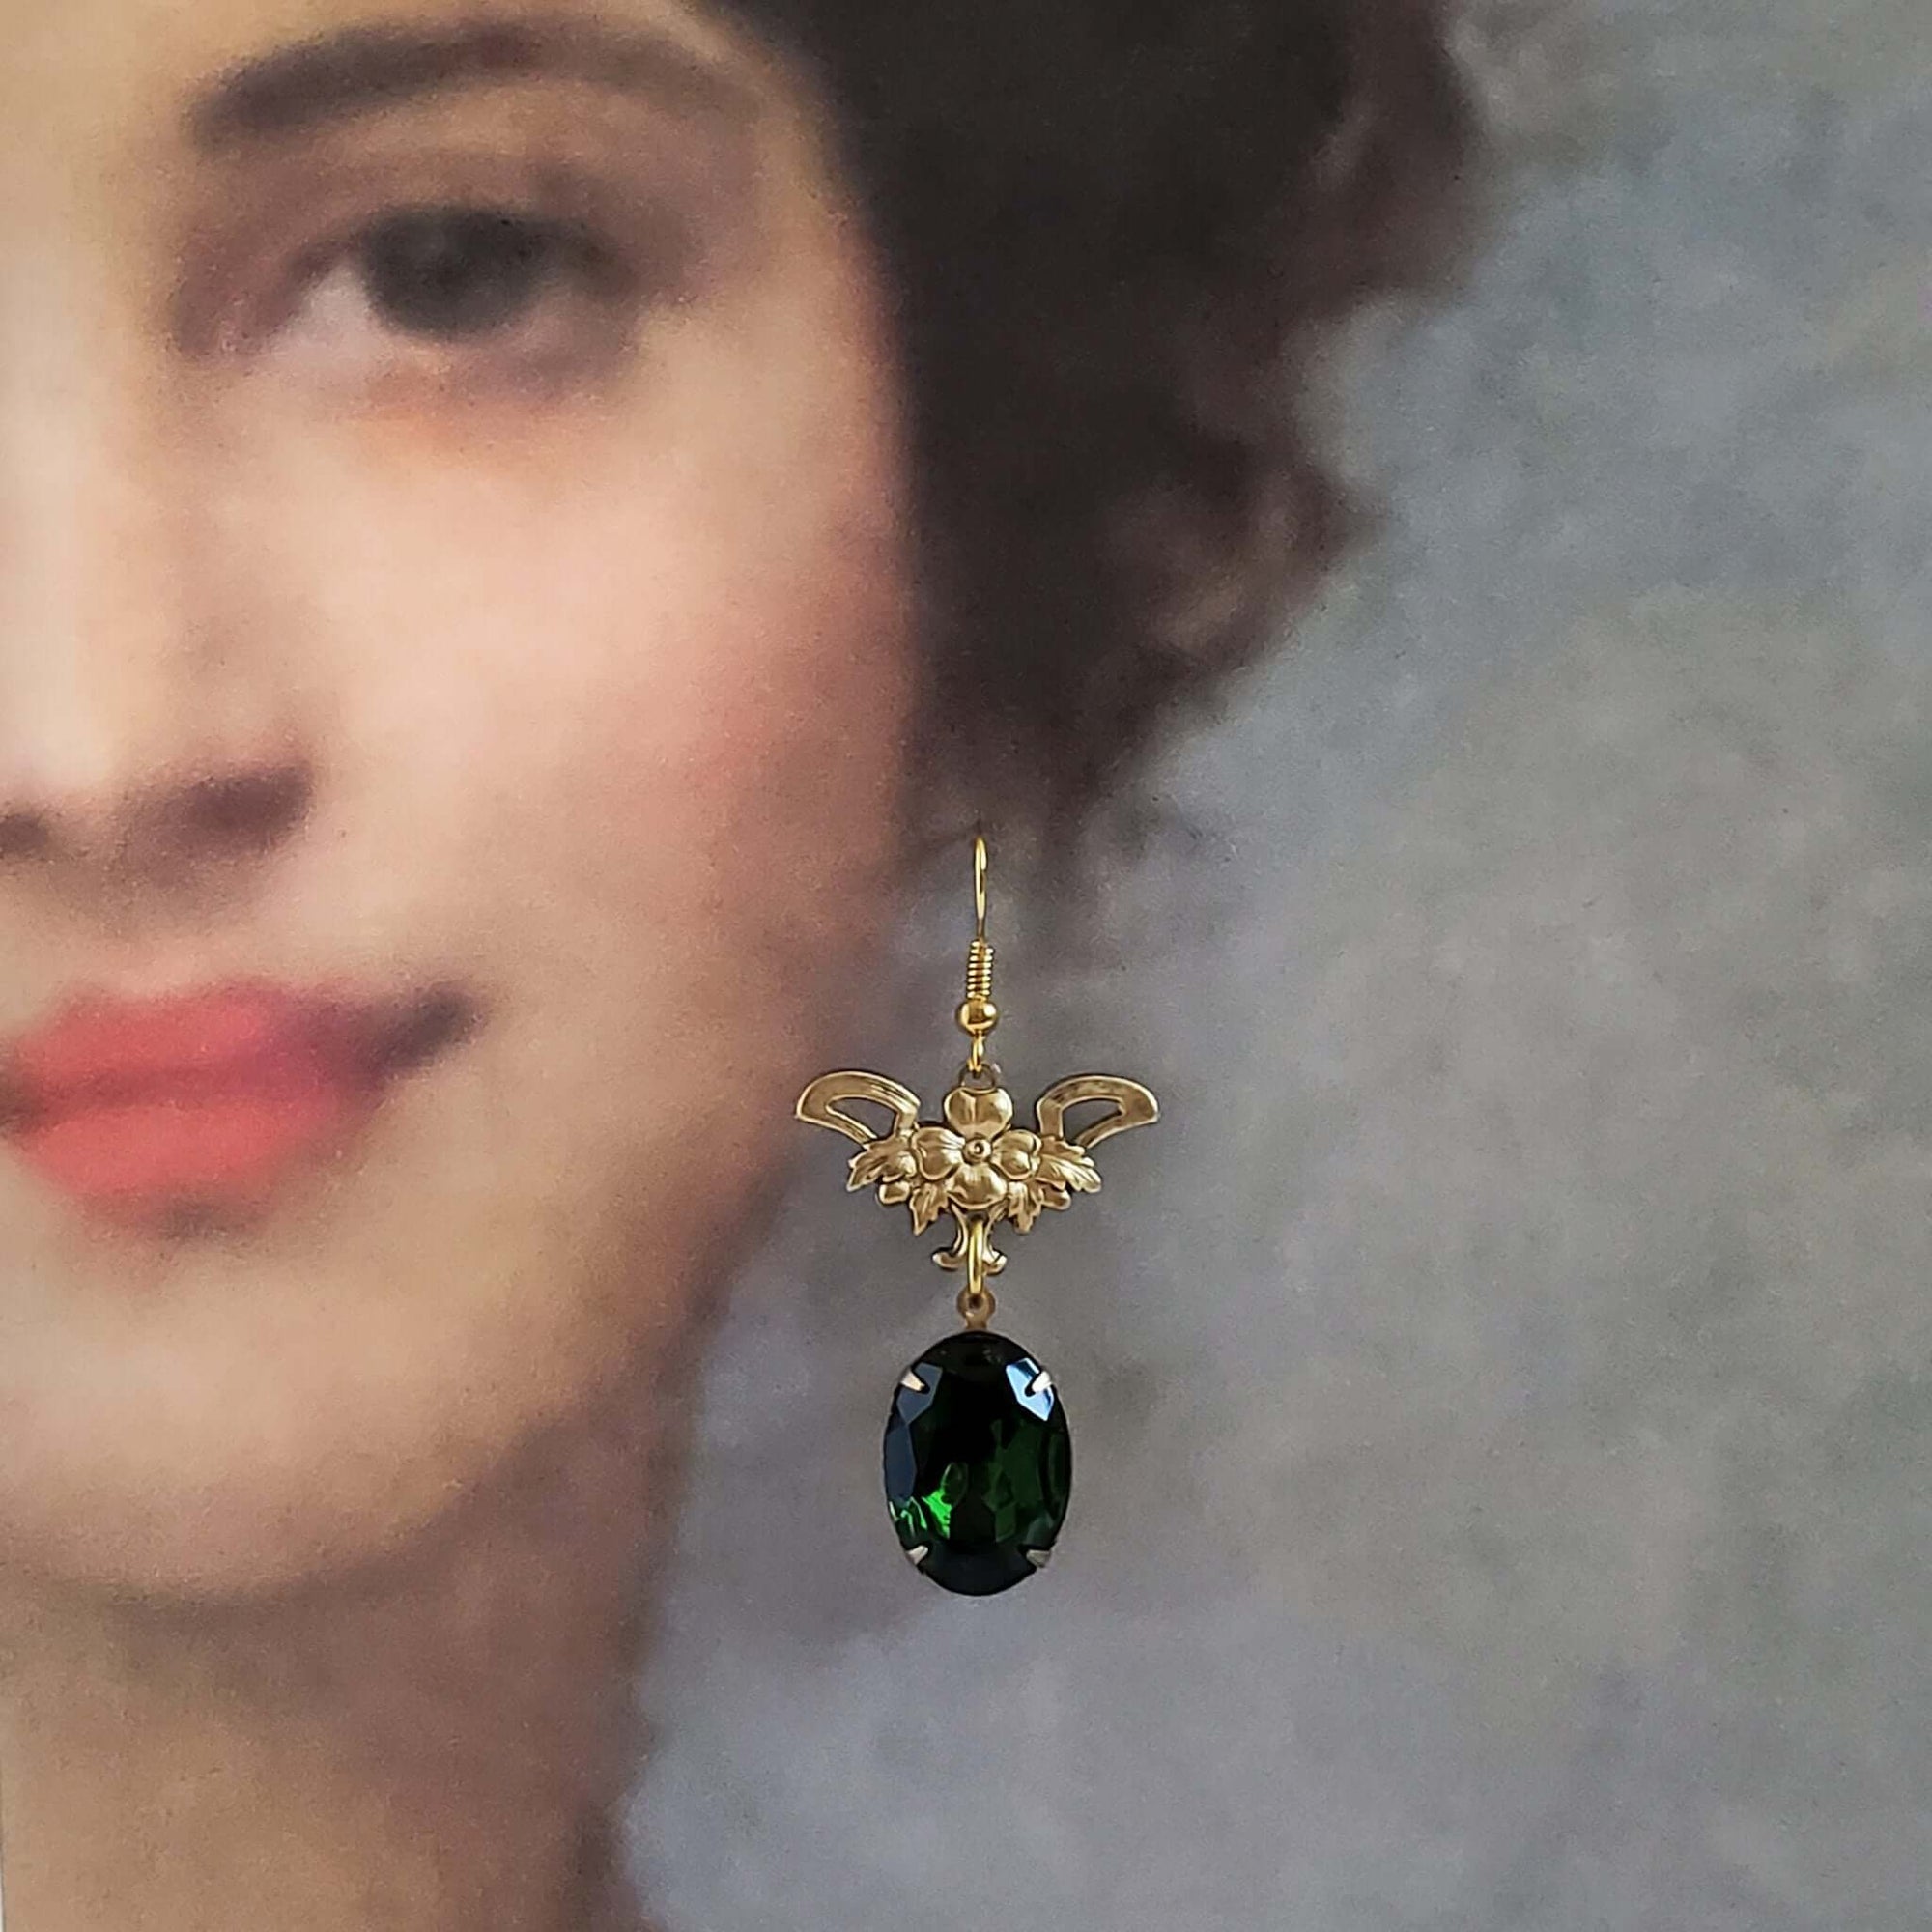 Victorian Style Statement Earrings